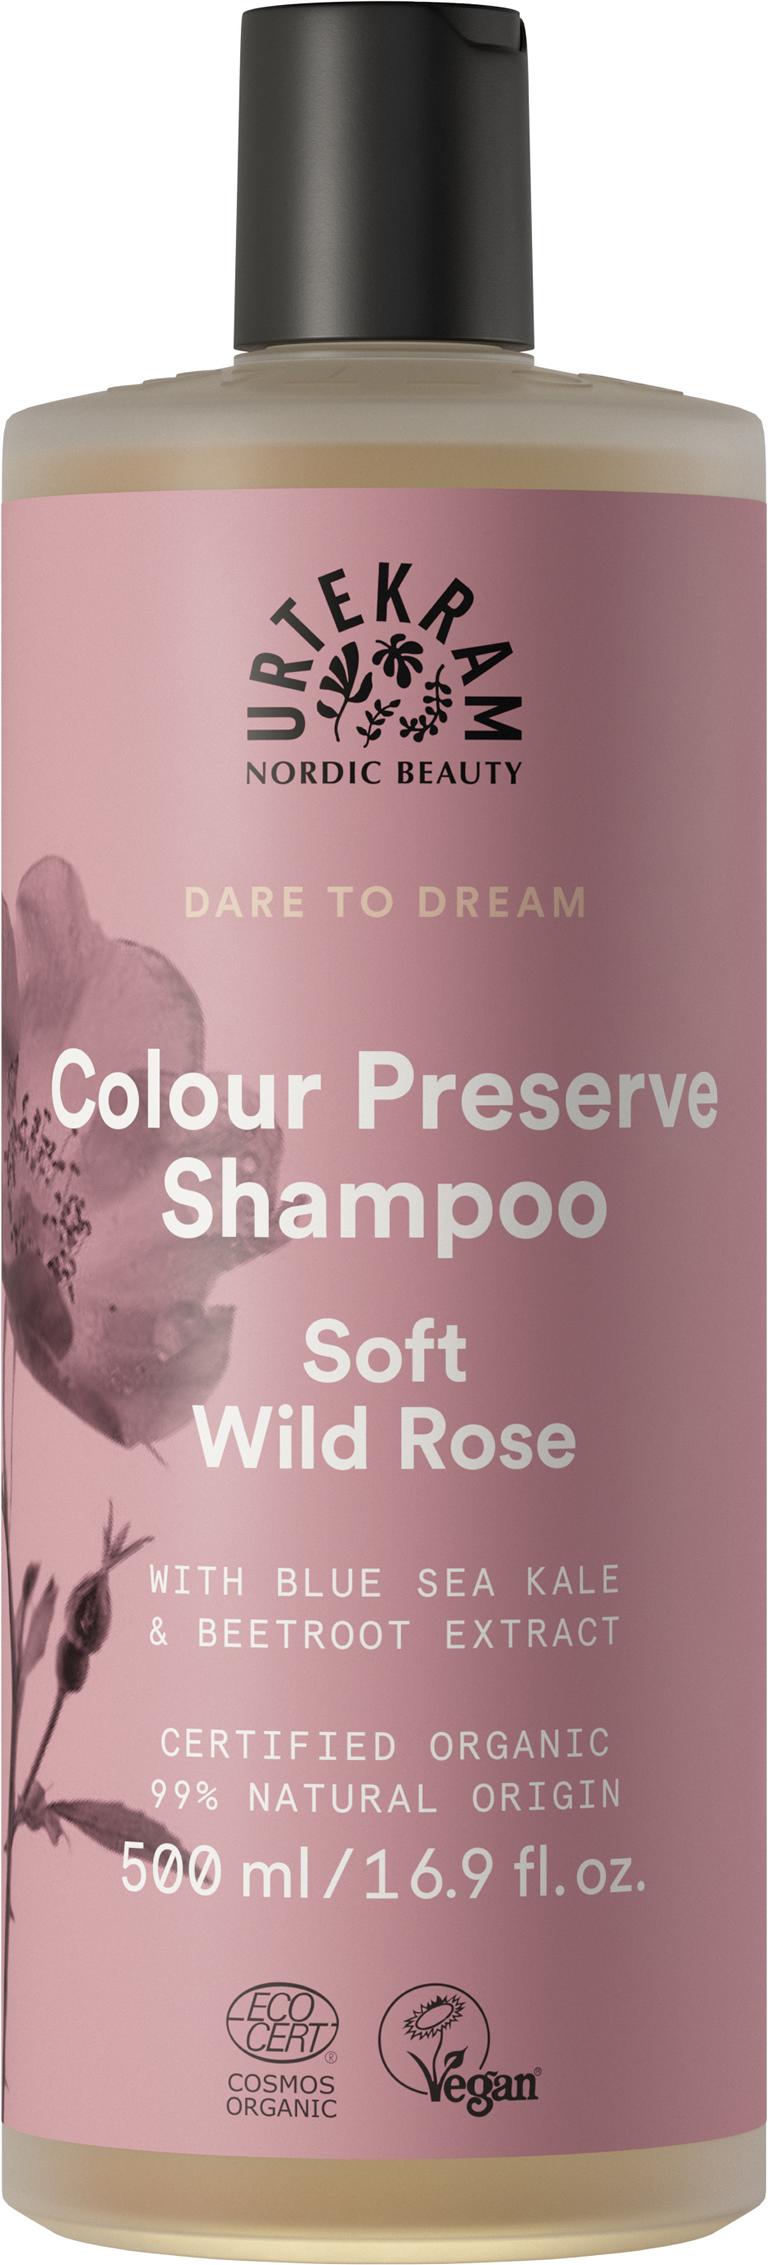 Urtekram Soft Wild Rose Shampoo 500 ml 500 ml